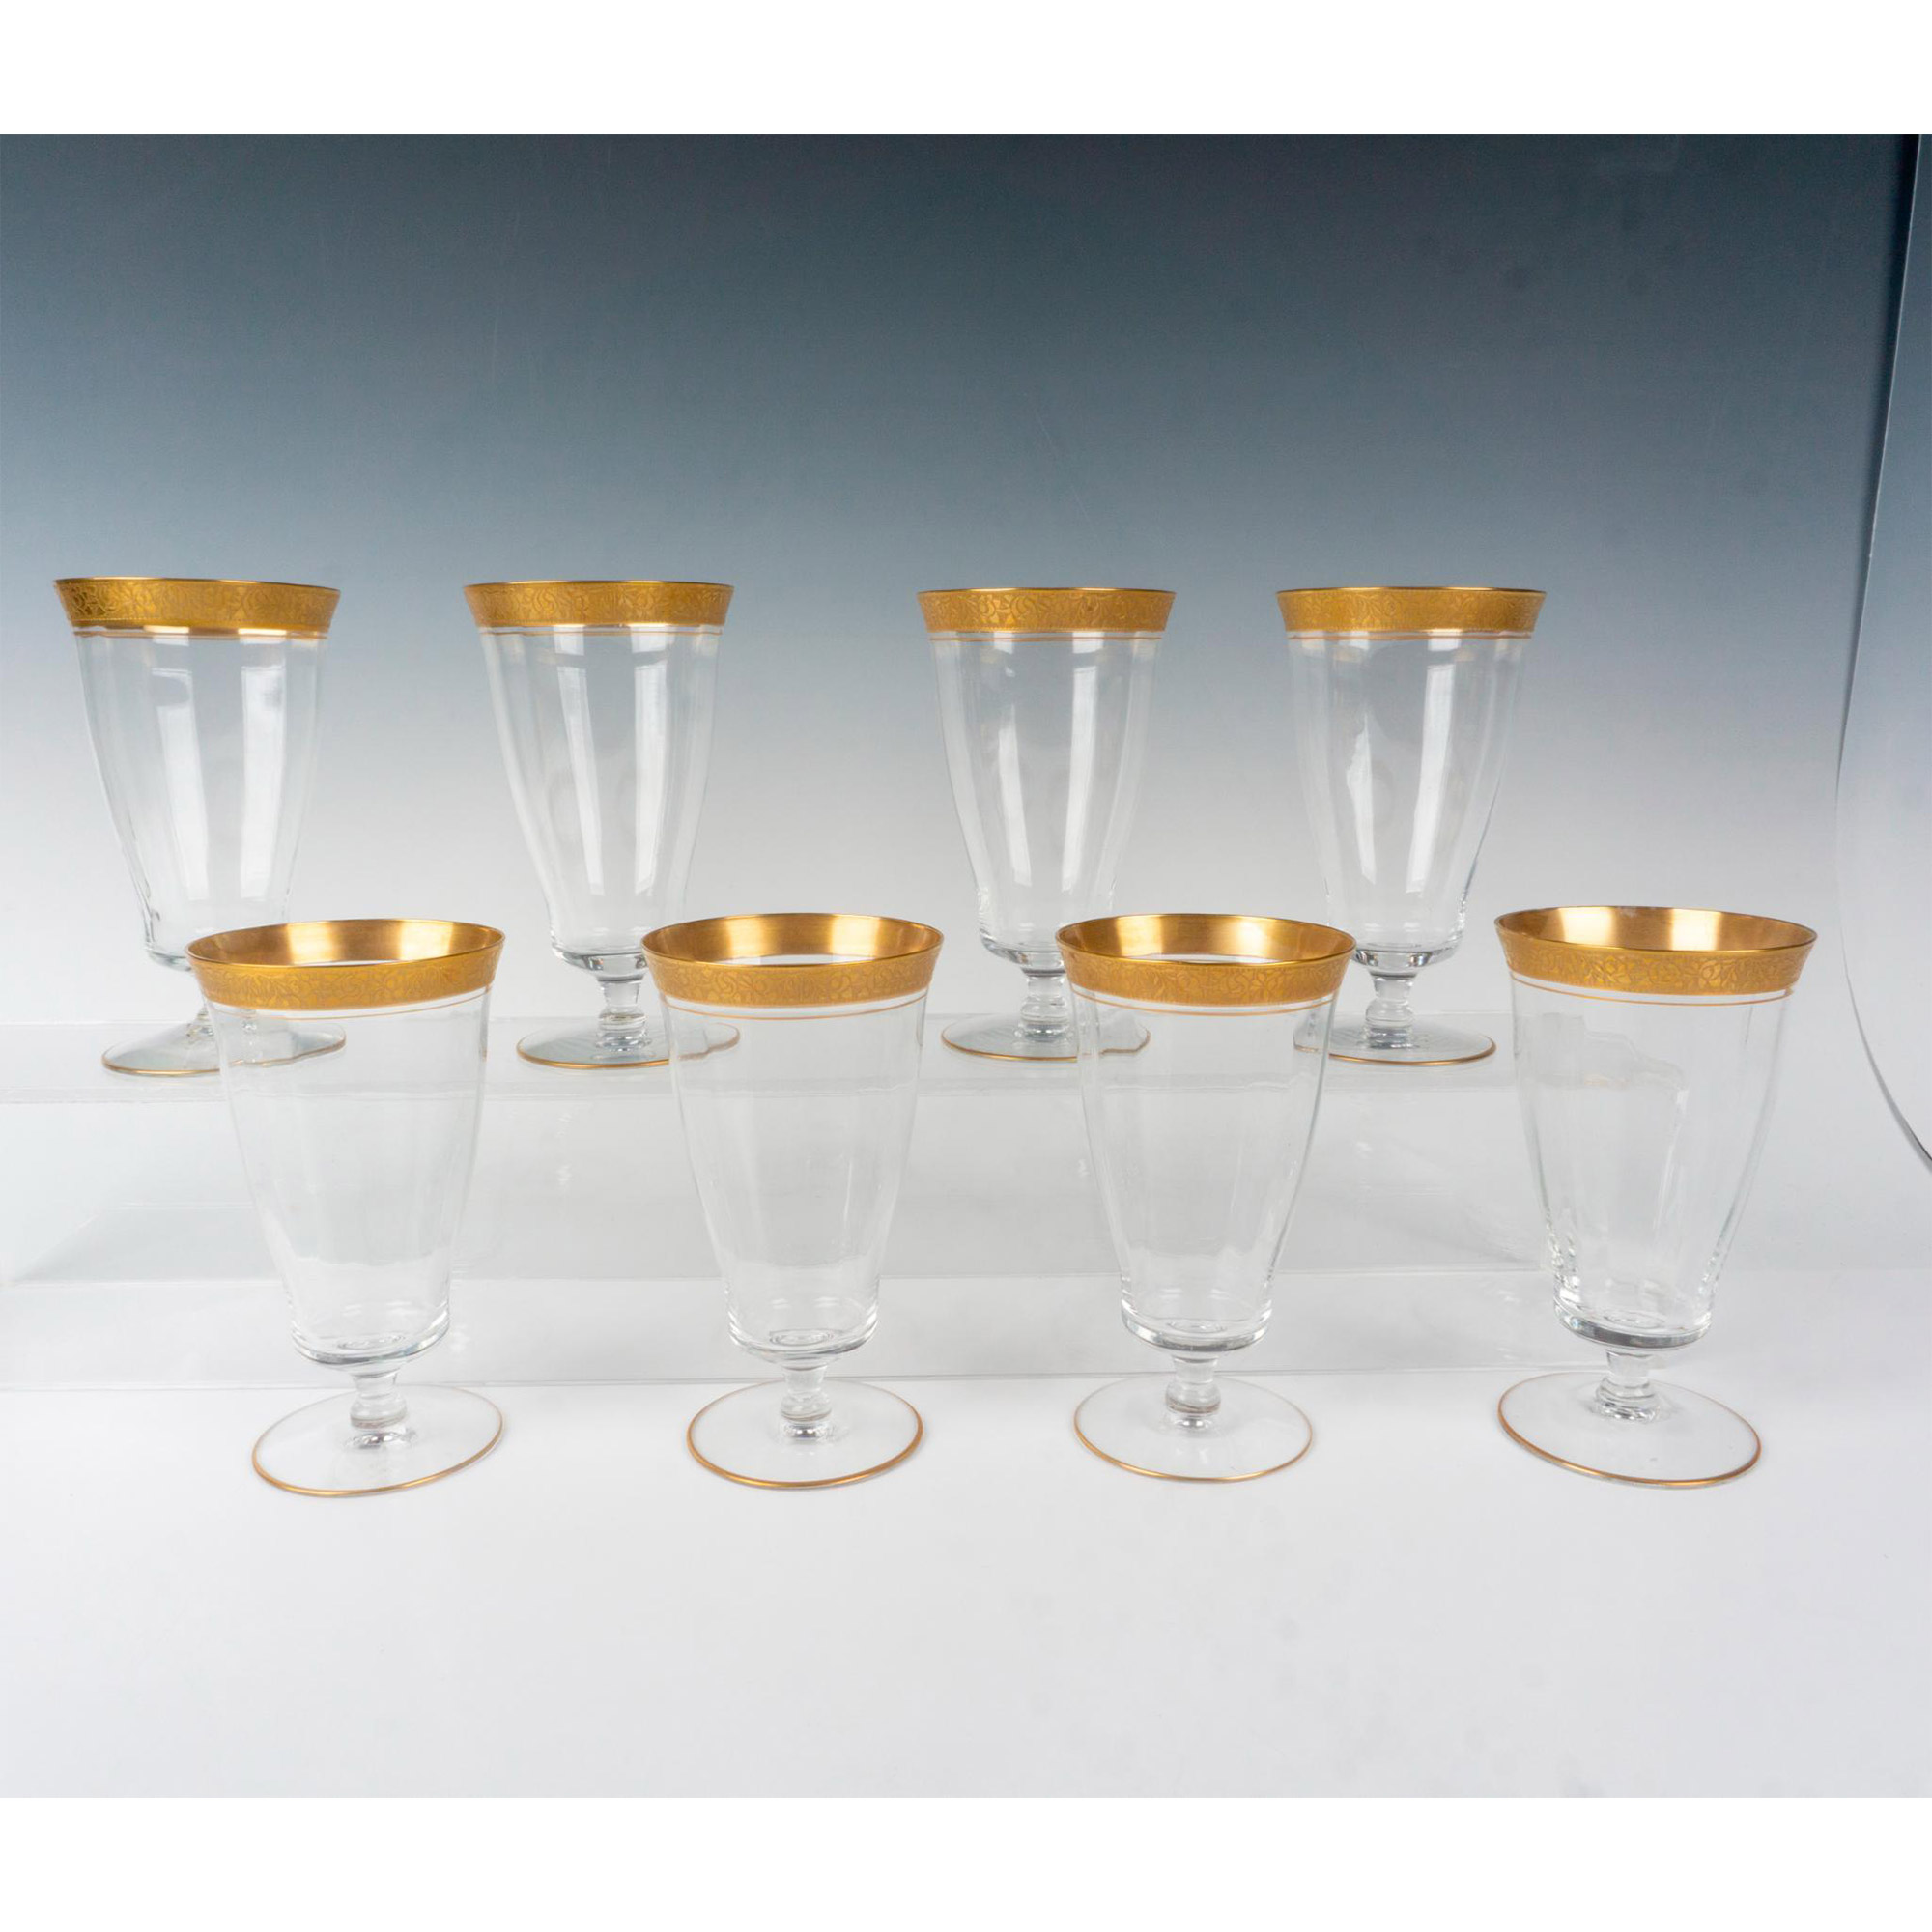 8pc Rambler Rose Gold Rimmed Iced Tea Glasses - Image 2 of 3